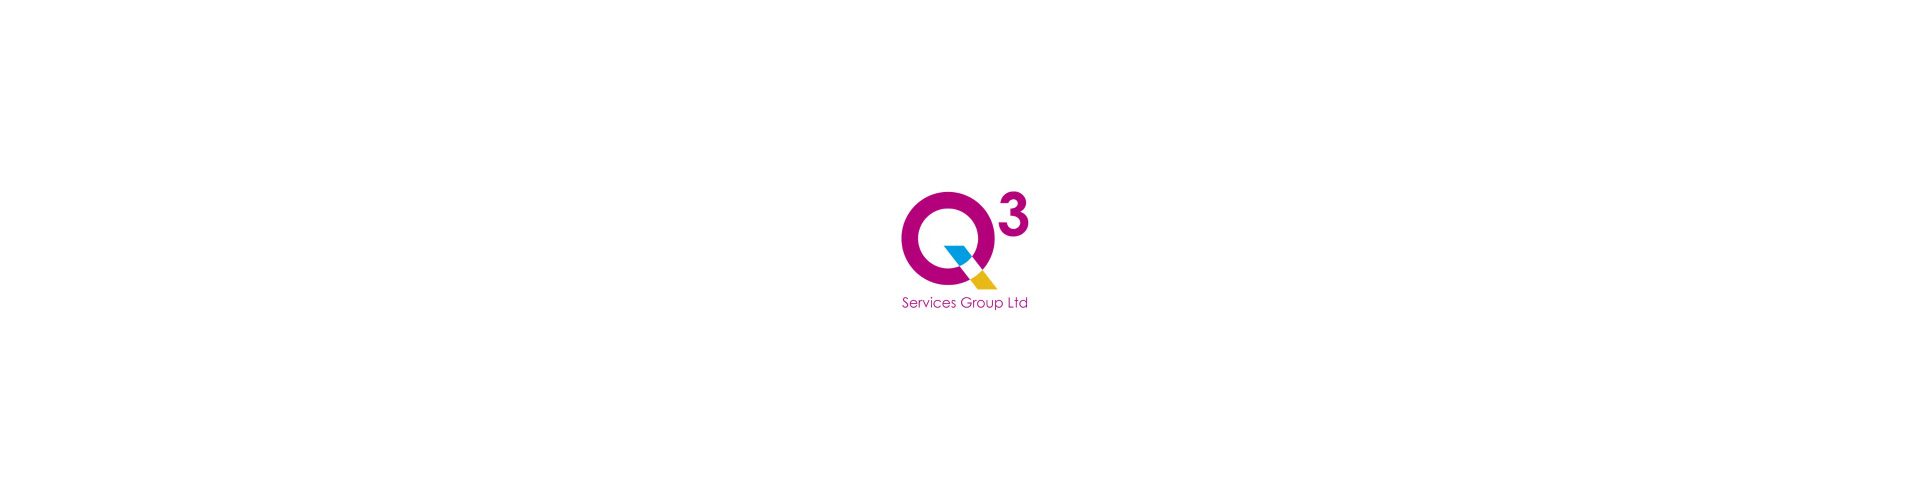 q3 service group ltd